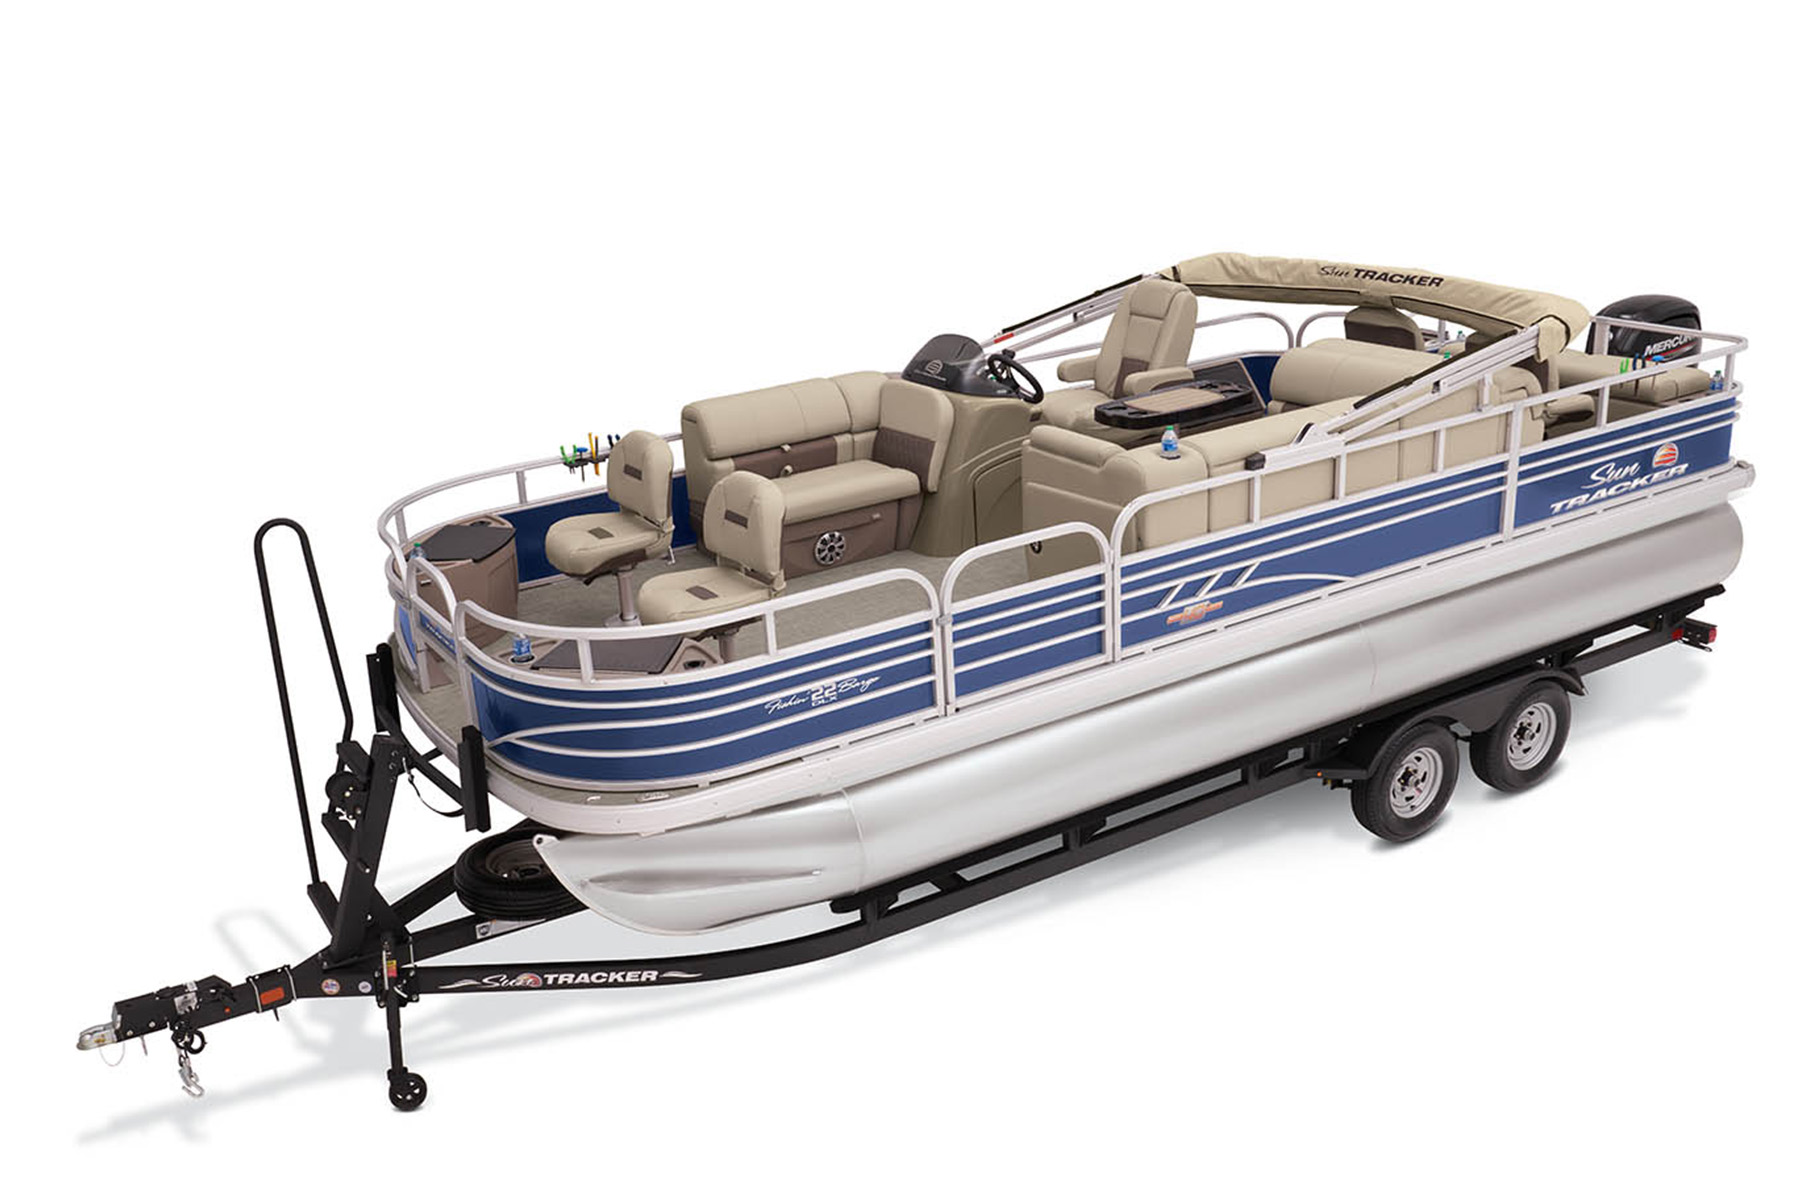 Fishin' Barge 22 Dlx - Sun Tracker Fishing Pontoon Boat